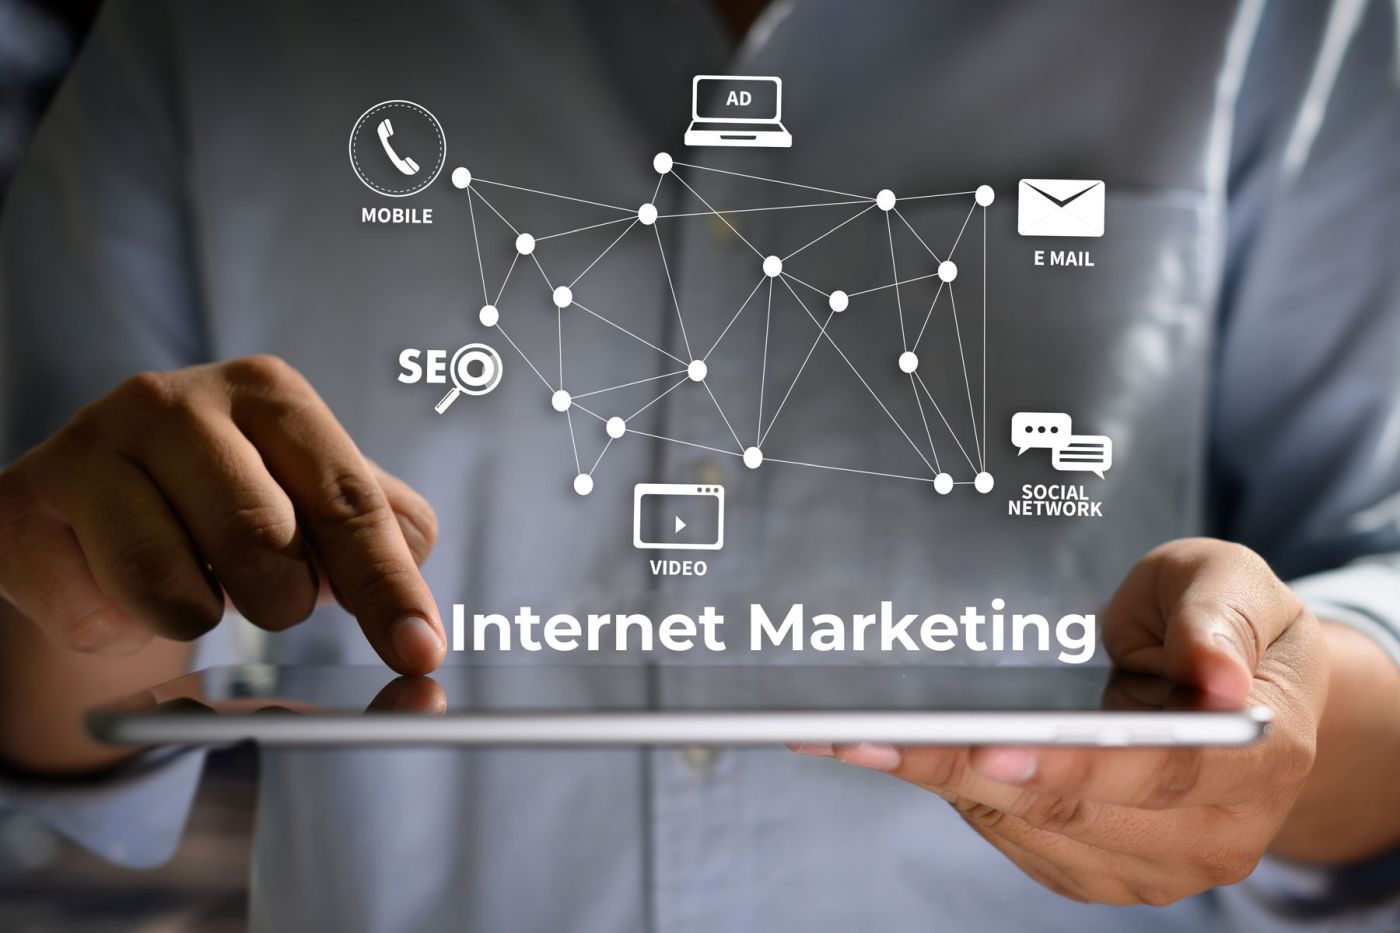 Small business internet marketing